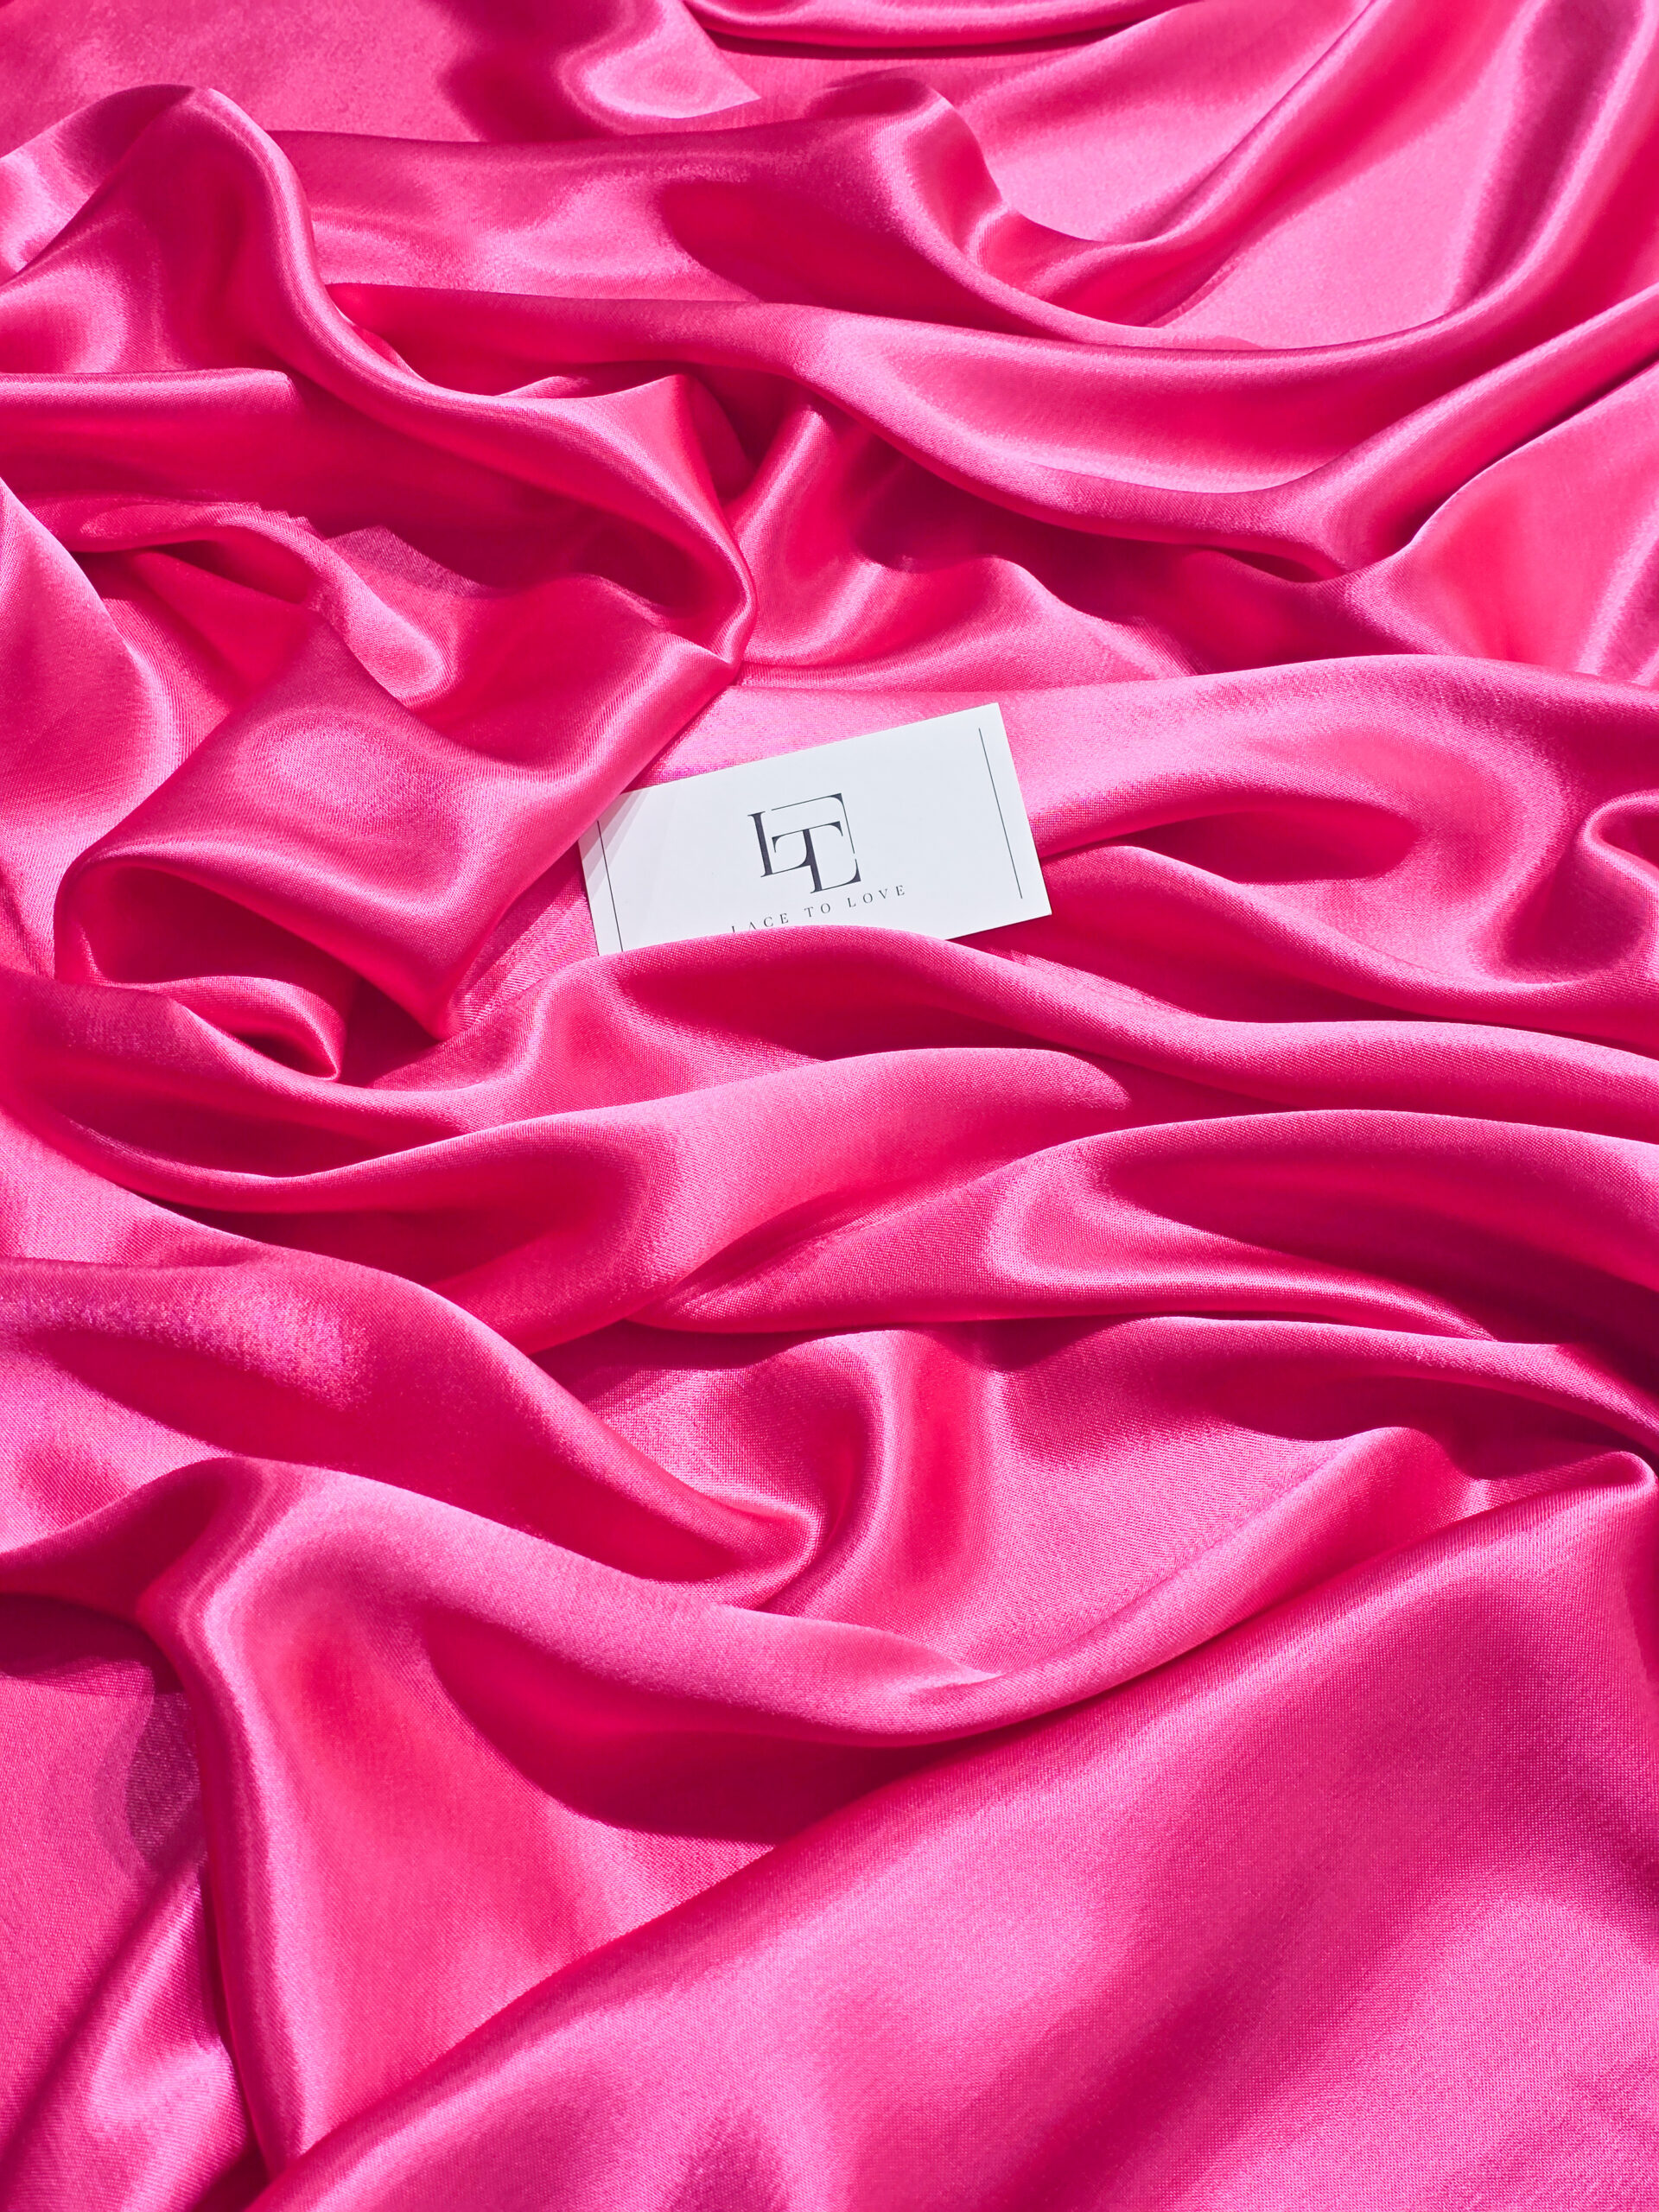 Pink slippery wedding dress fabric buy online